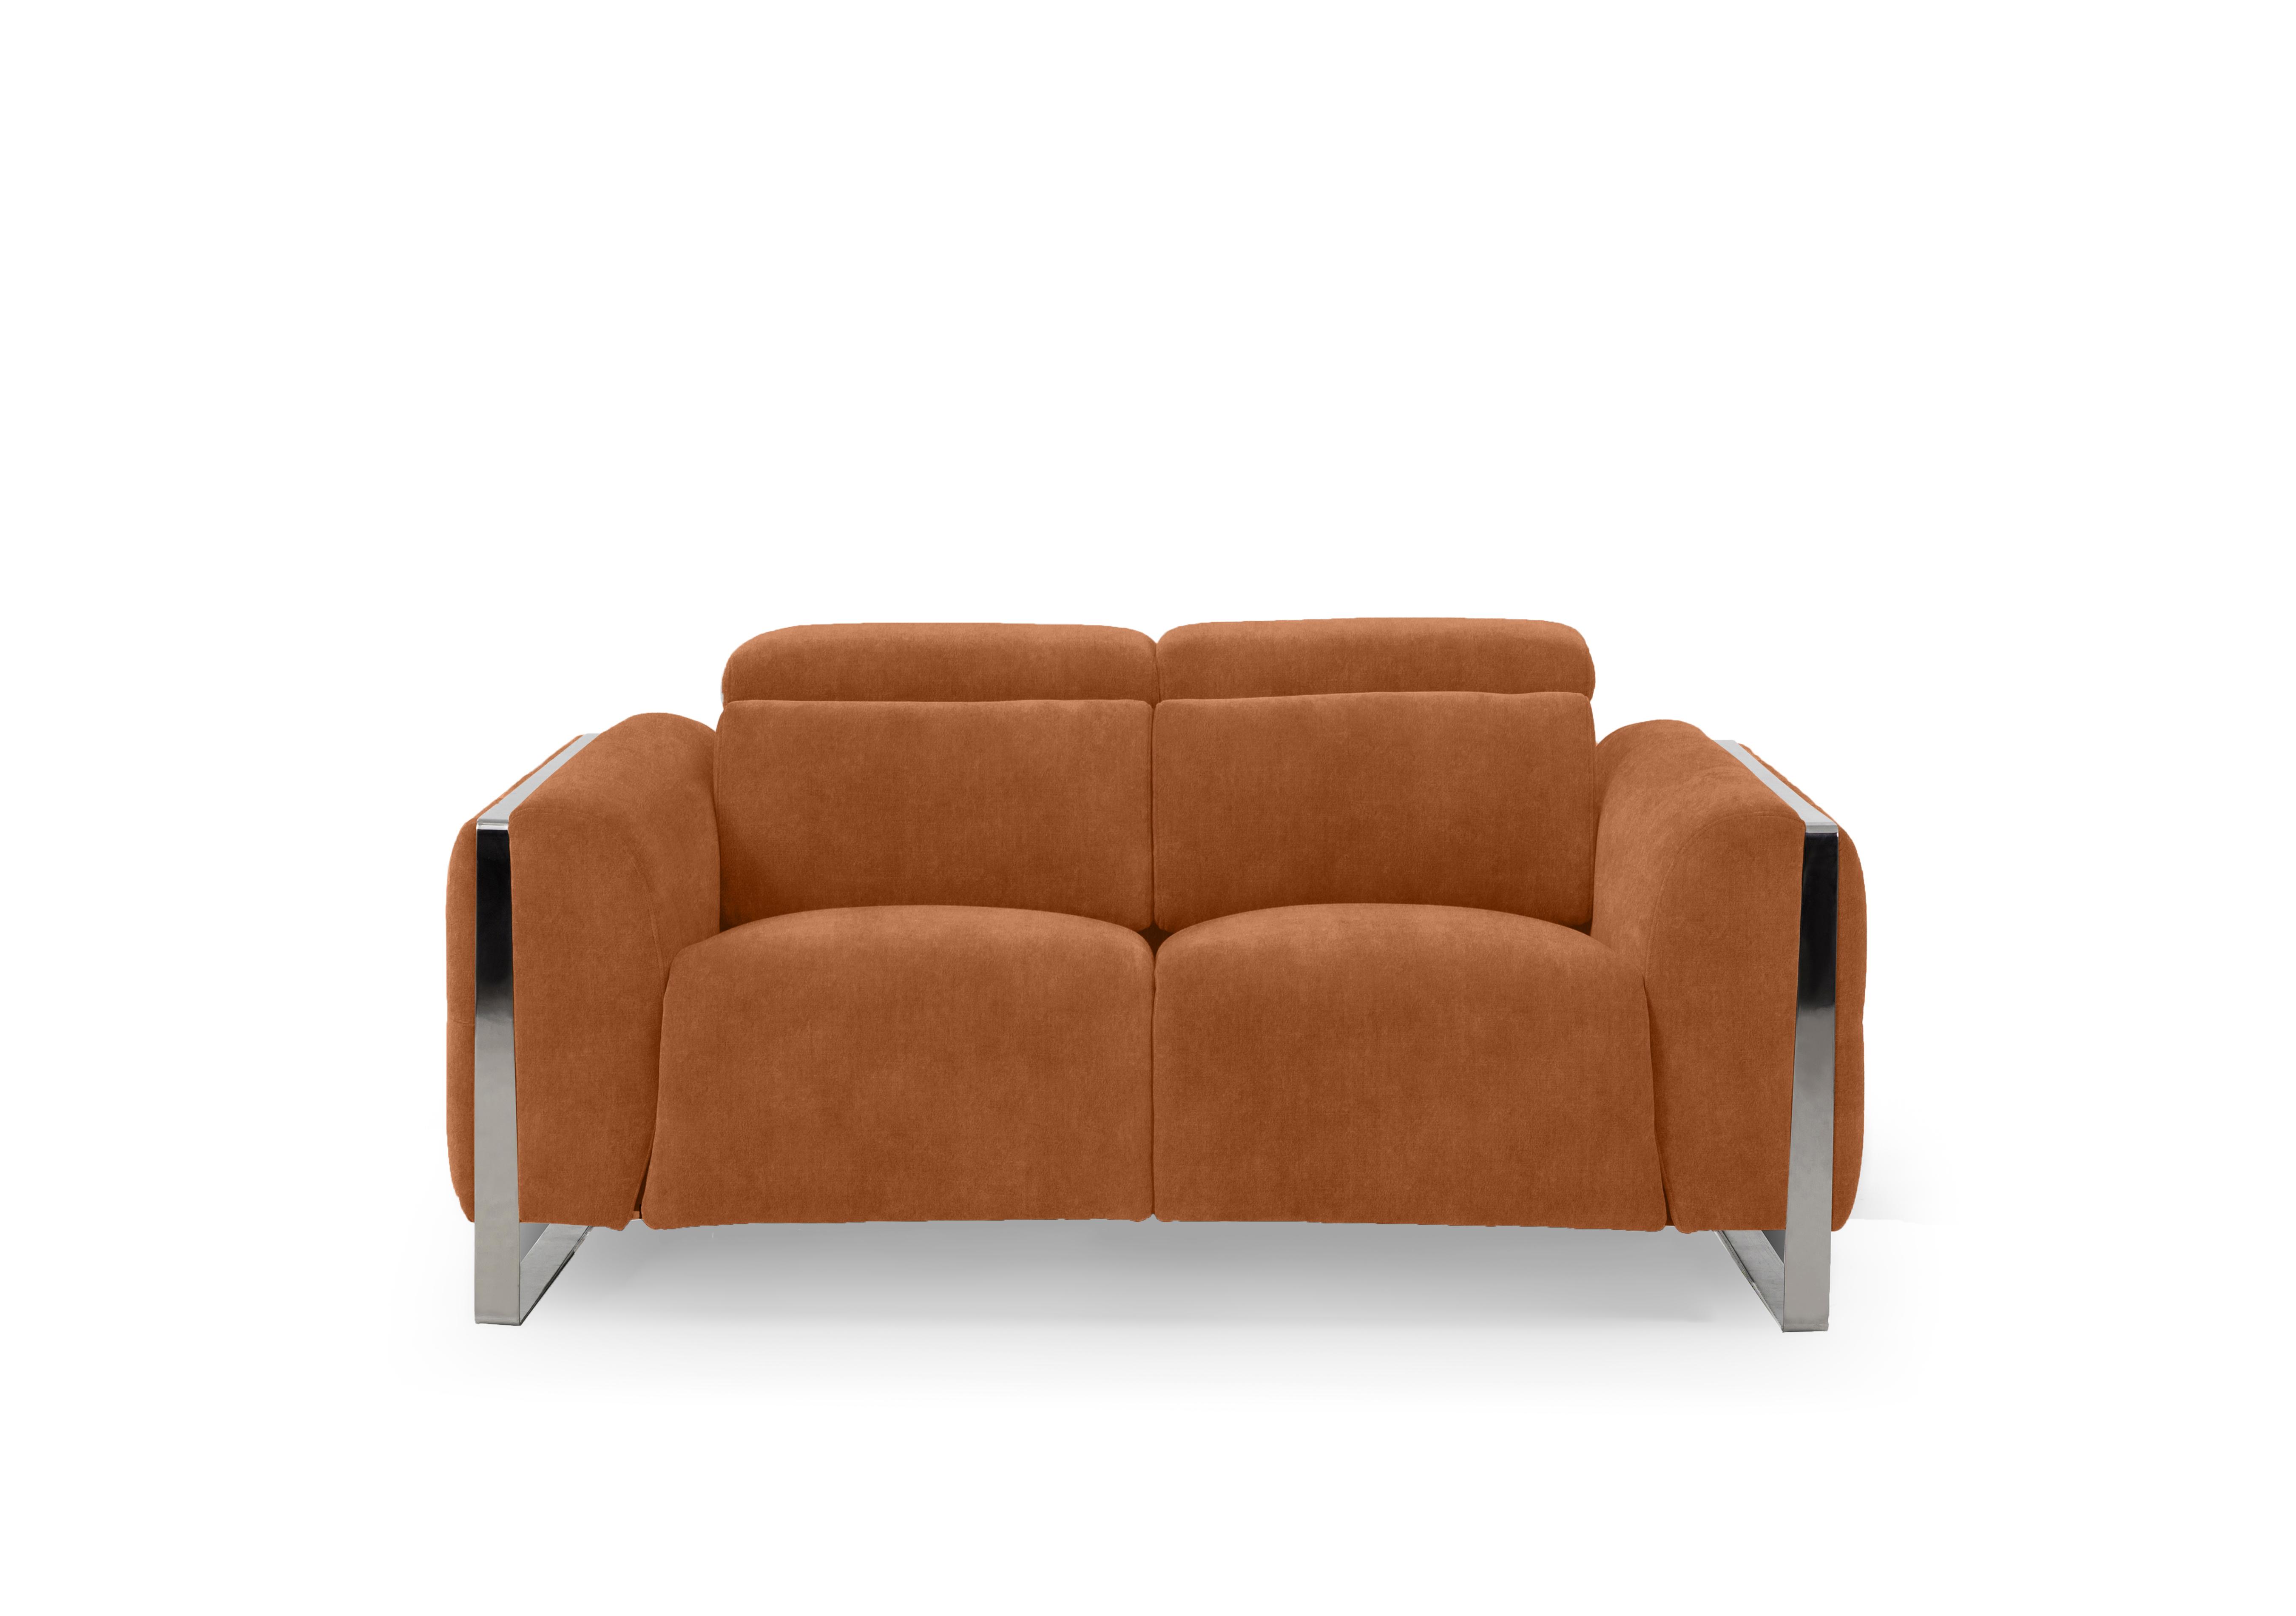 Gisella Fabric 2 Seater Sofa in Dexter Pumpkin 43509 on Furniture Village